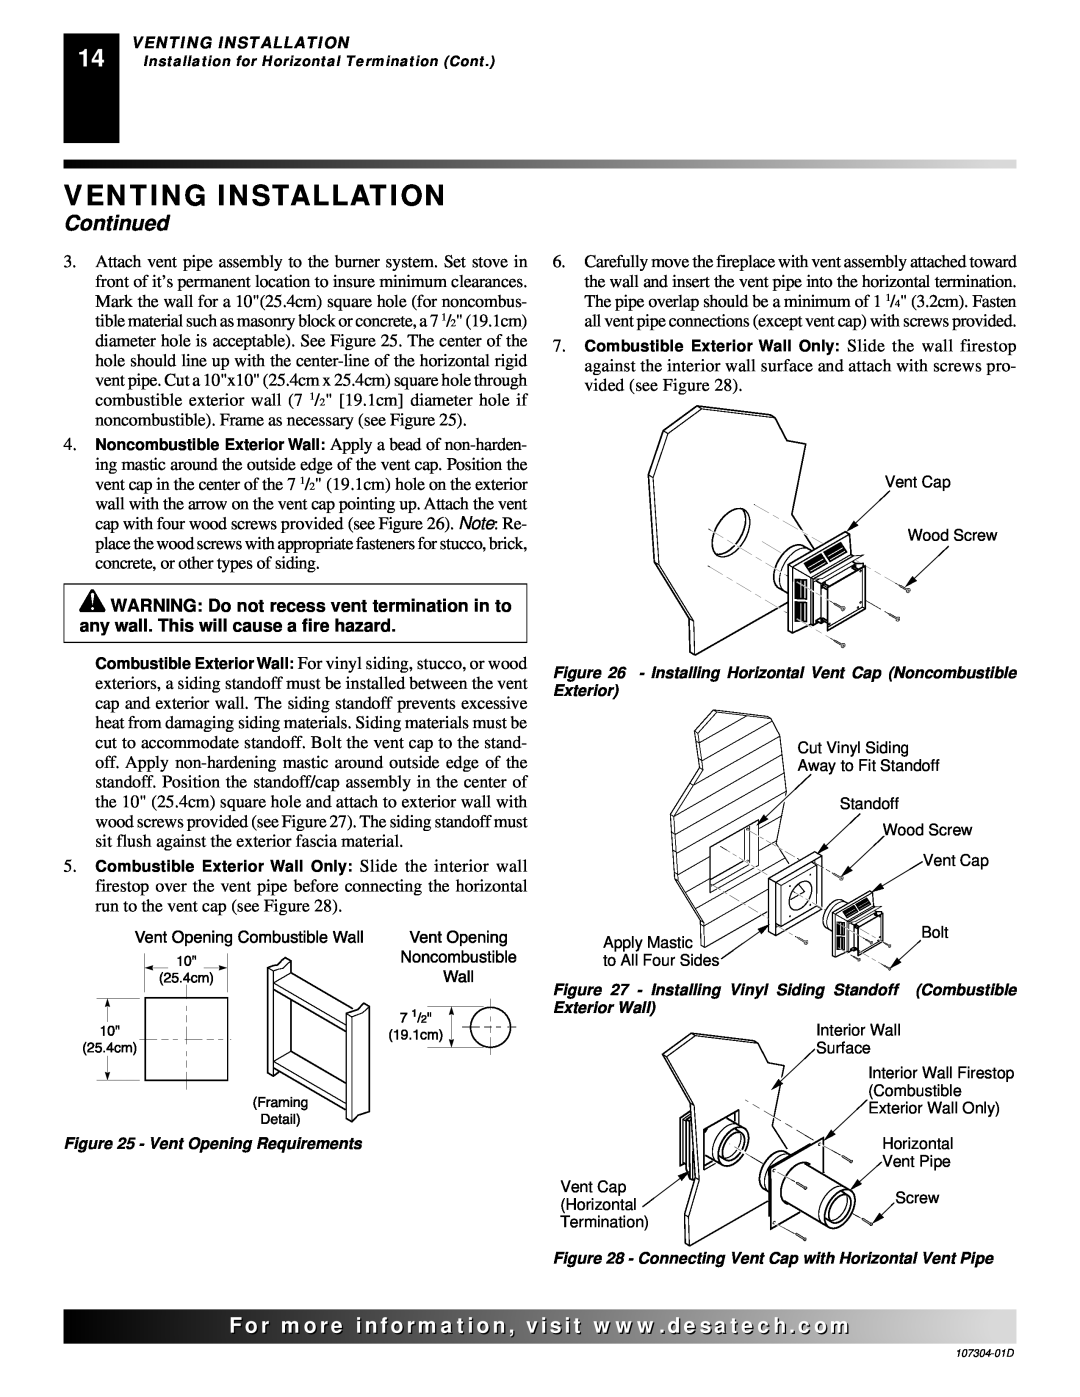 Desa SDVBPC, SDVBNC installation manual Venting Installation, Continued, Vent Opening Requirements 